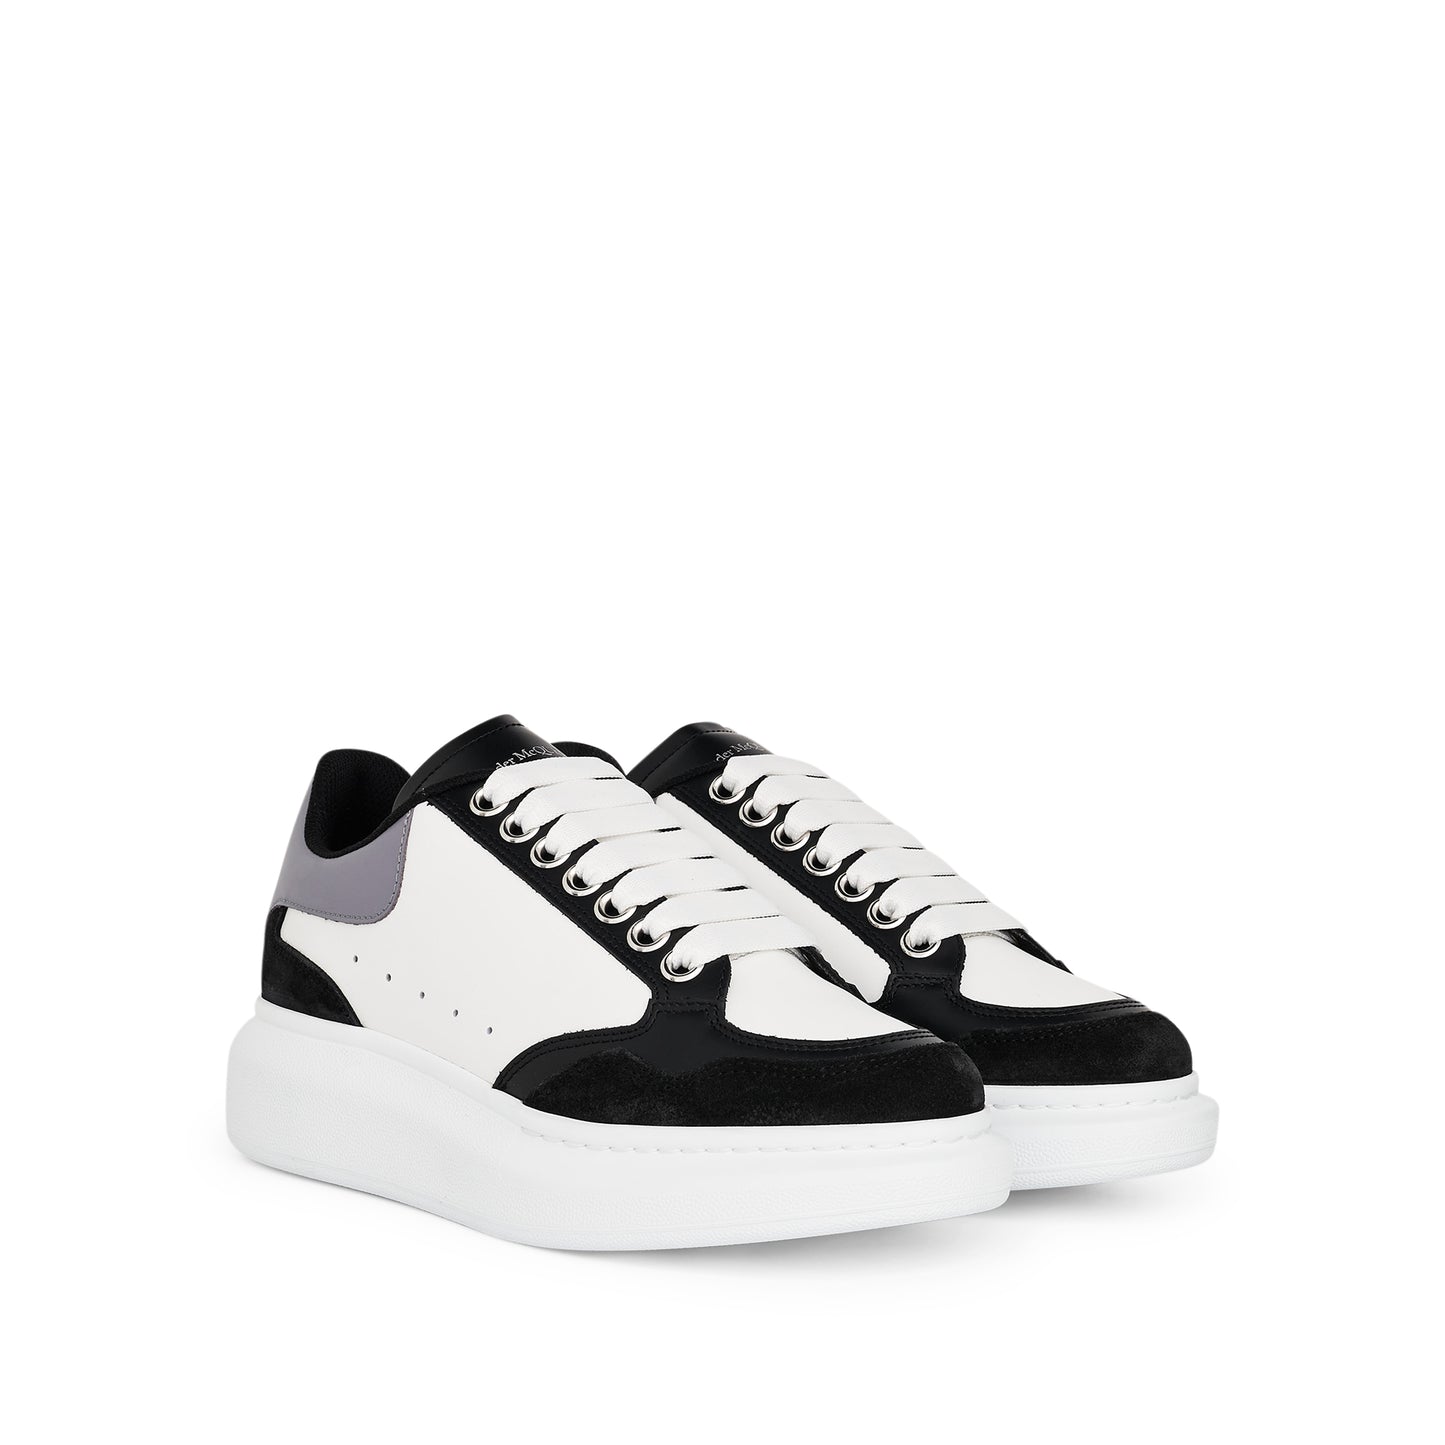 Larry Oversized Sensory Sneakers in Black/White